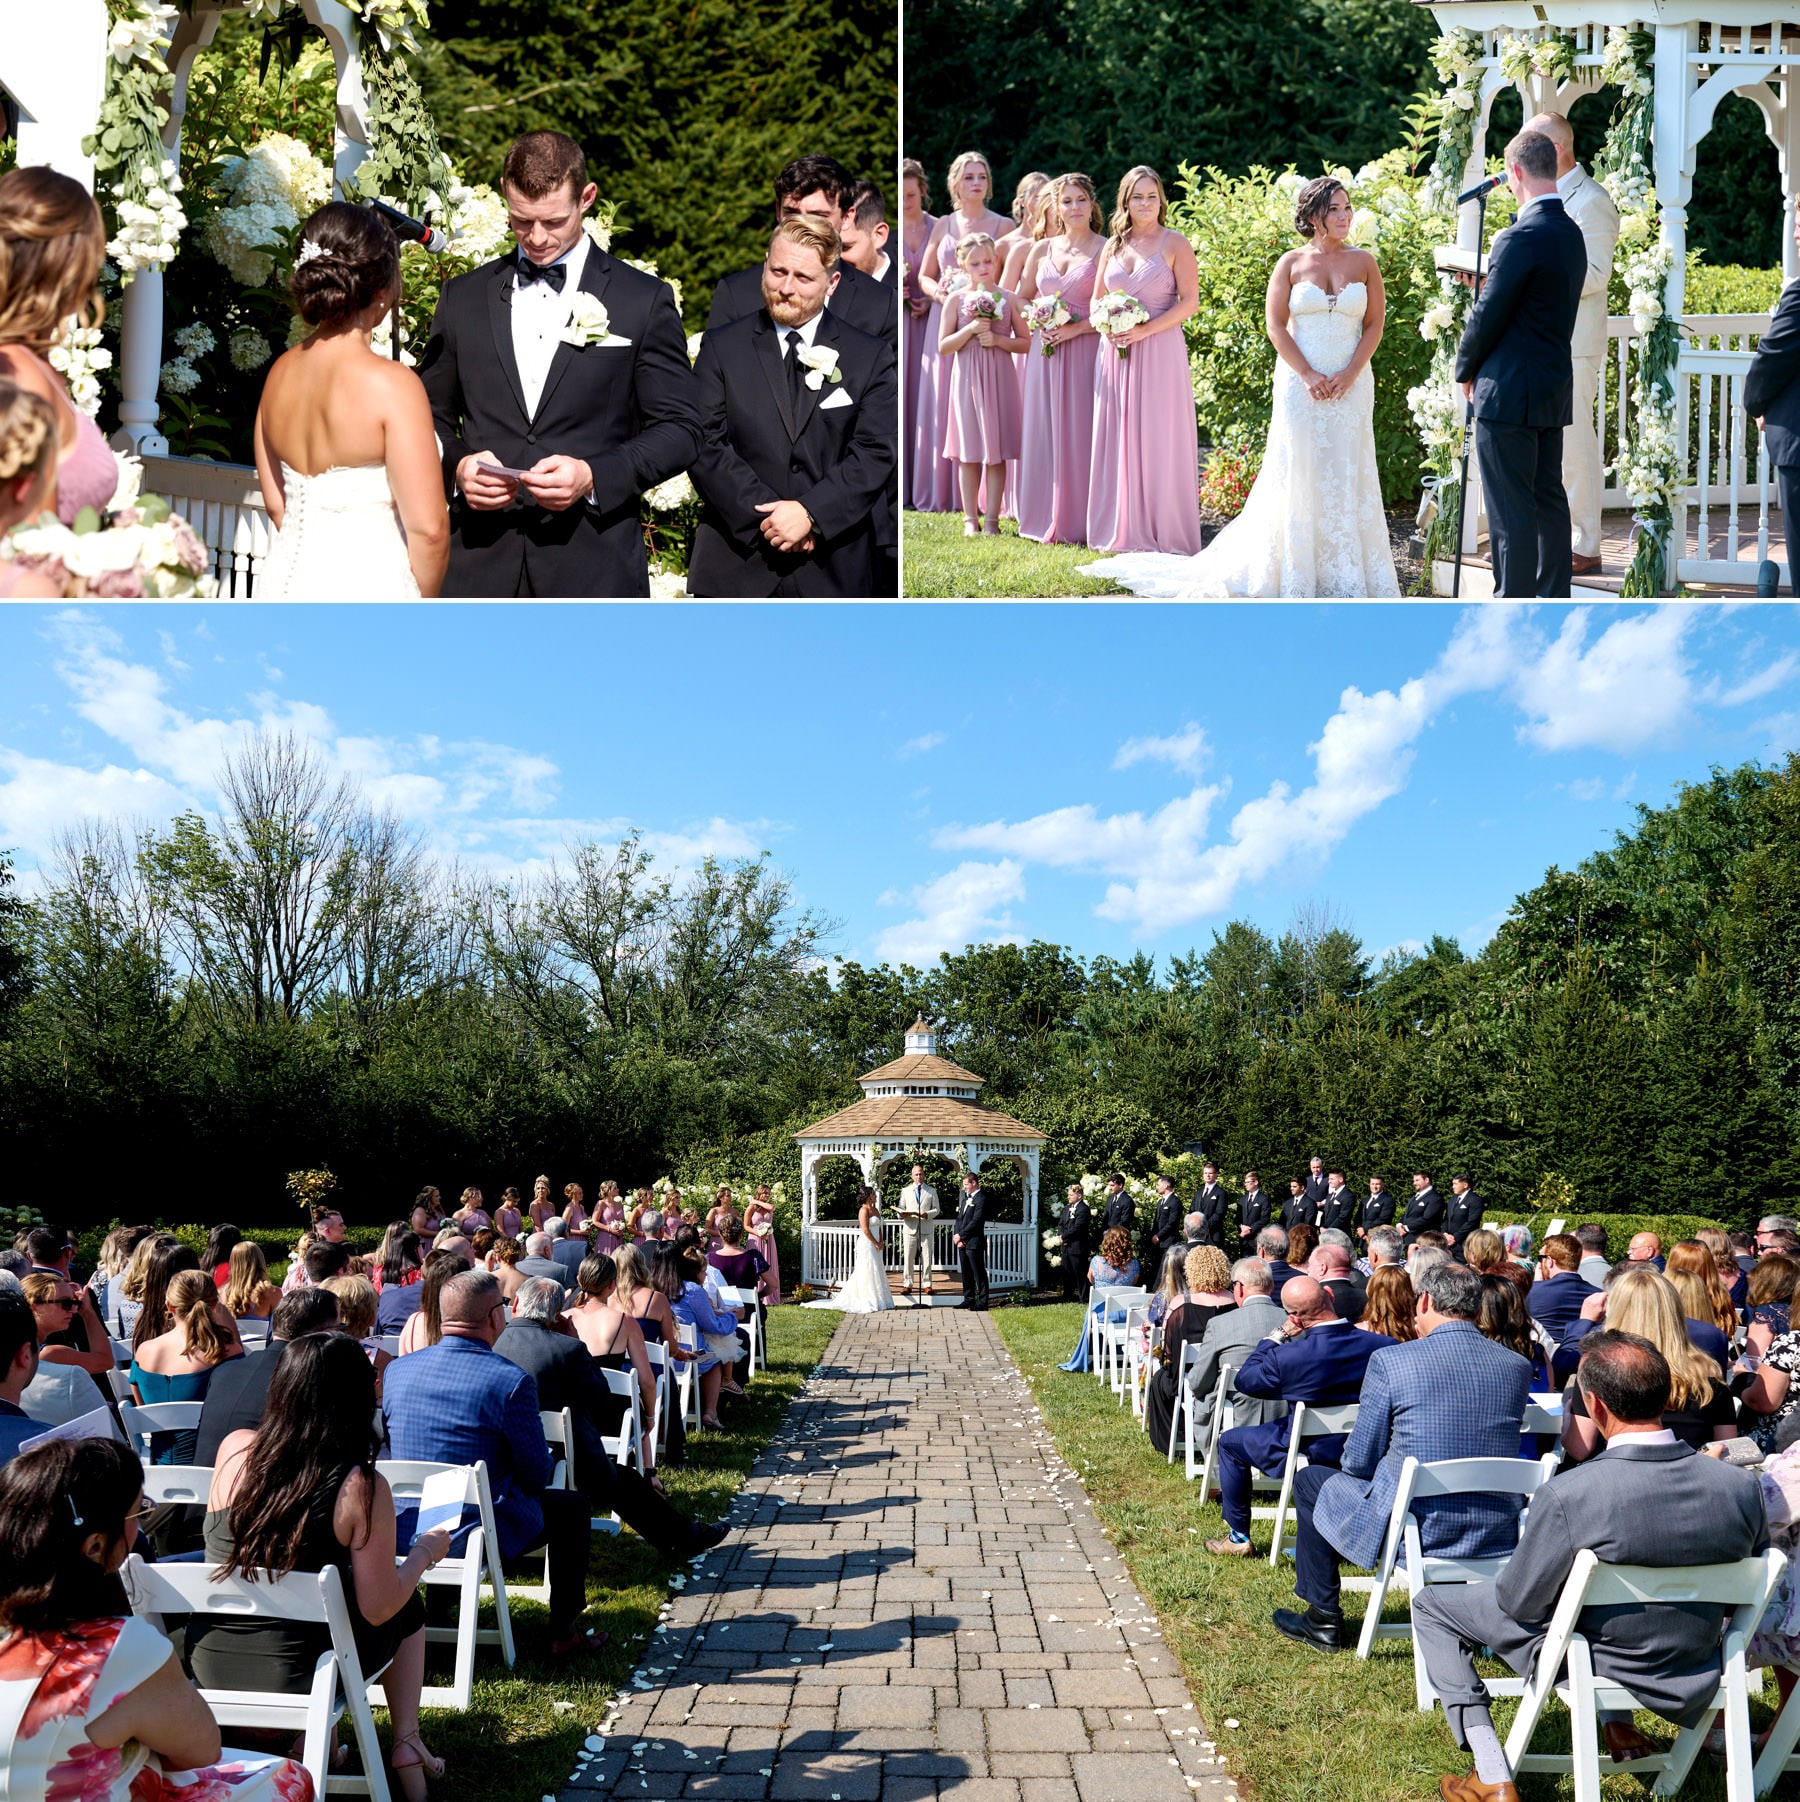 The Farmhouse wedding ceremony site photos